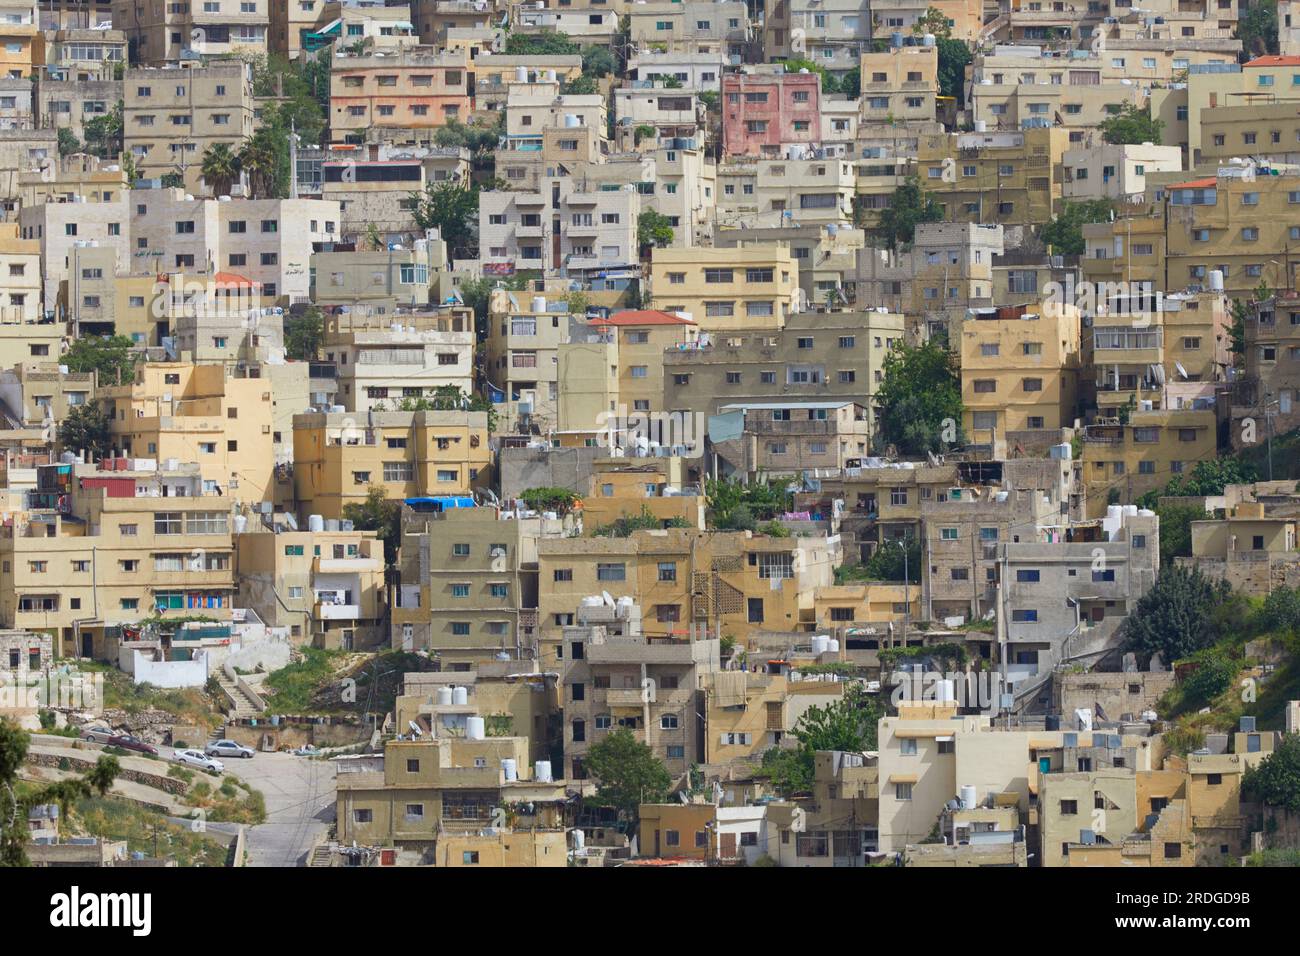 View of buildings Amman city buildings on a hillside, Amman, Jordan Stock Photo